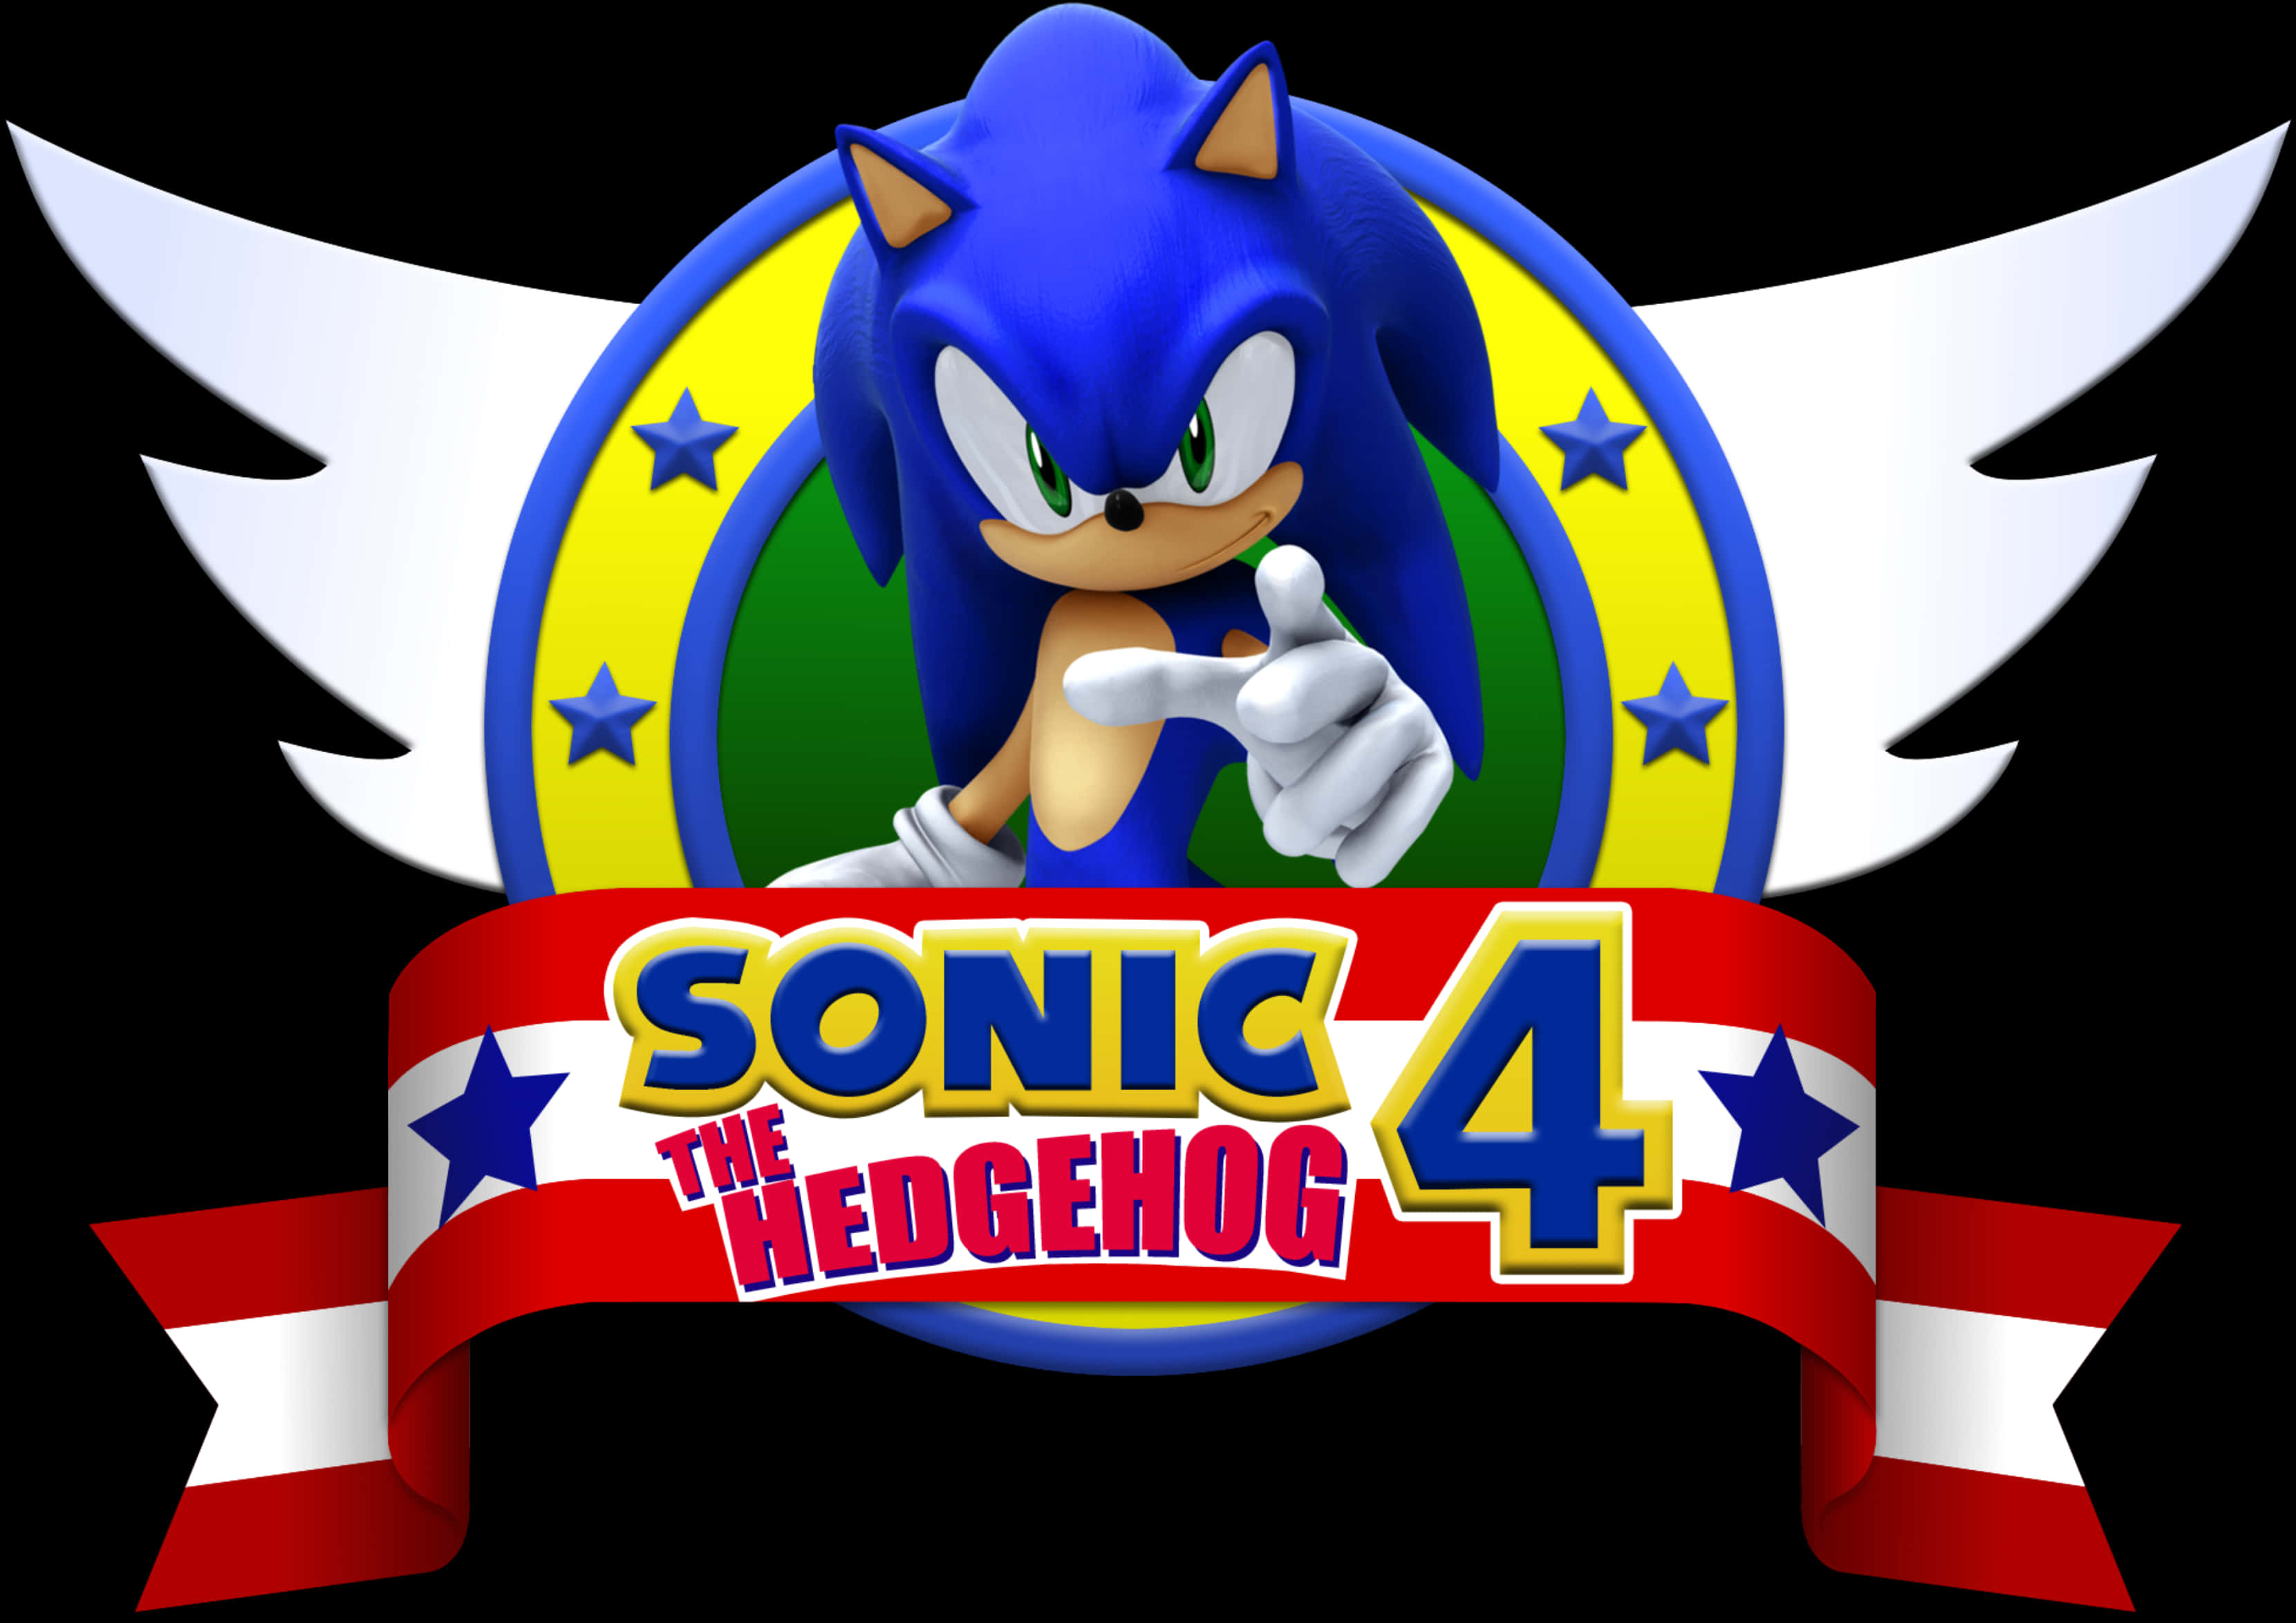 Sonic The Hedgehog4 Logo PNG image